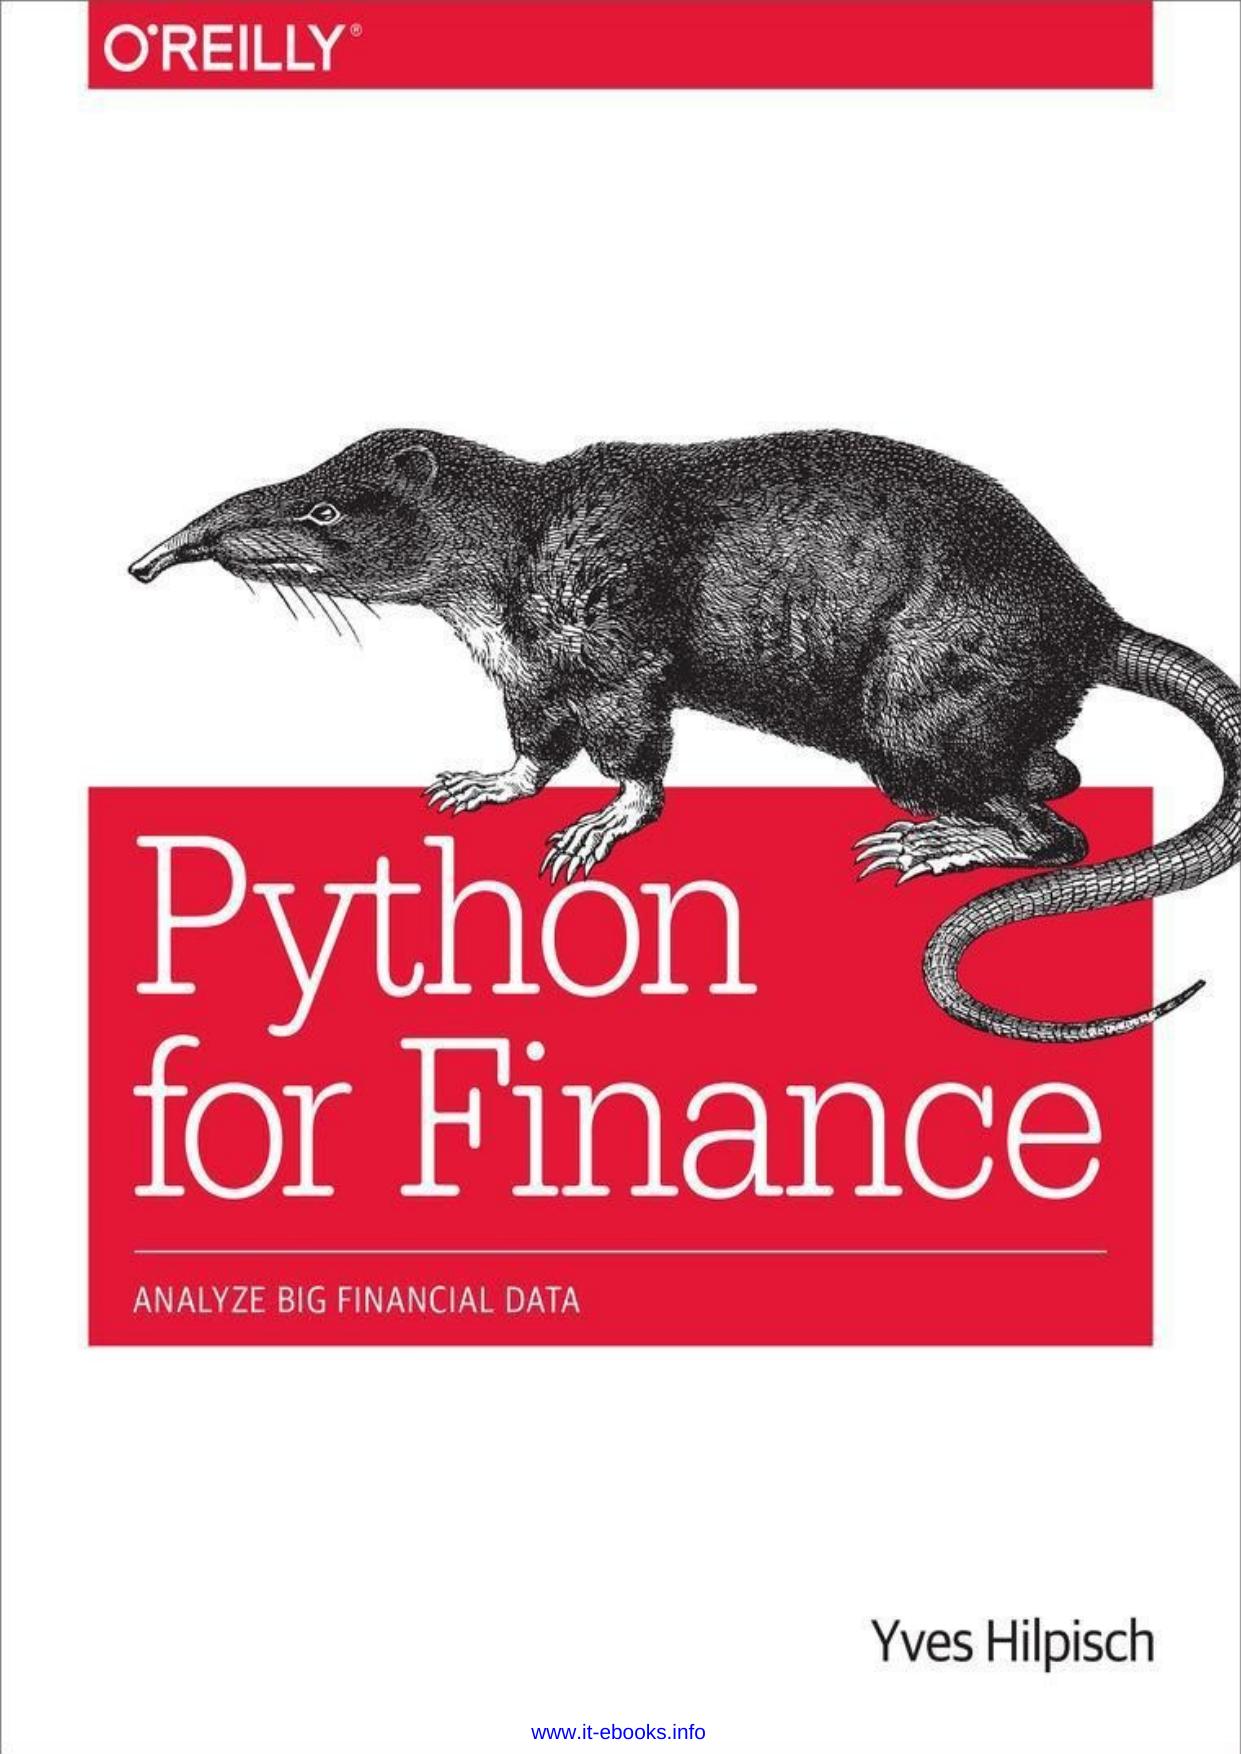 Python for Finance: Analyze Big Financial Data by Yves Hilpisch